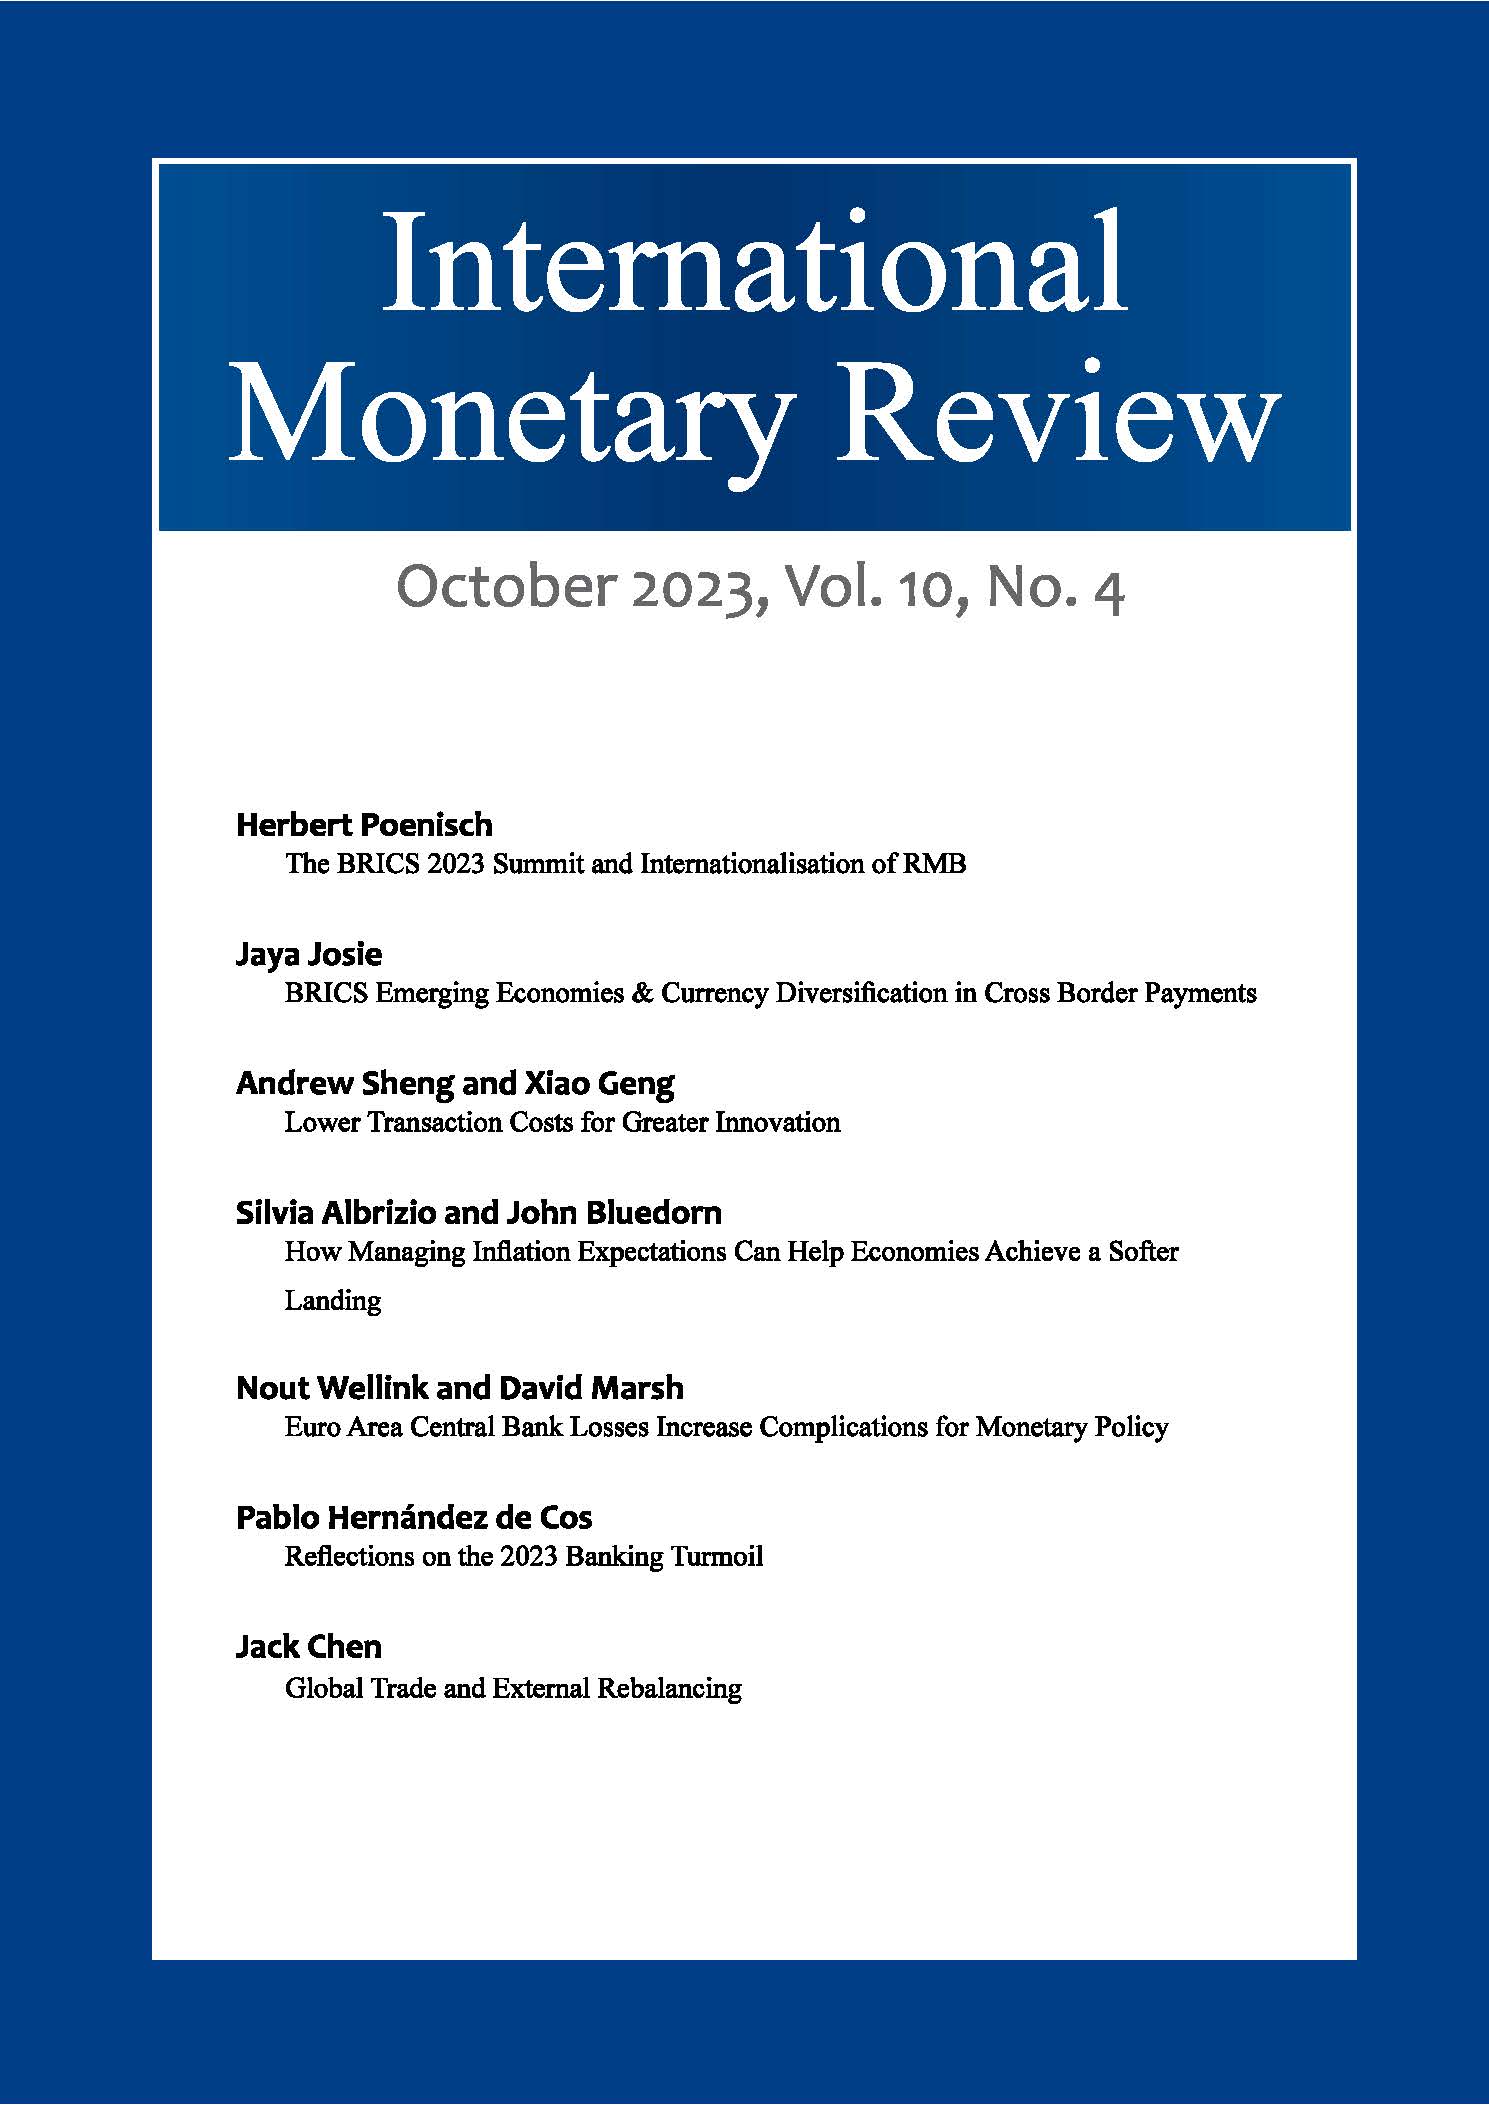 International Monetary Review, October 2023, Vol. 10 No. 4